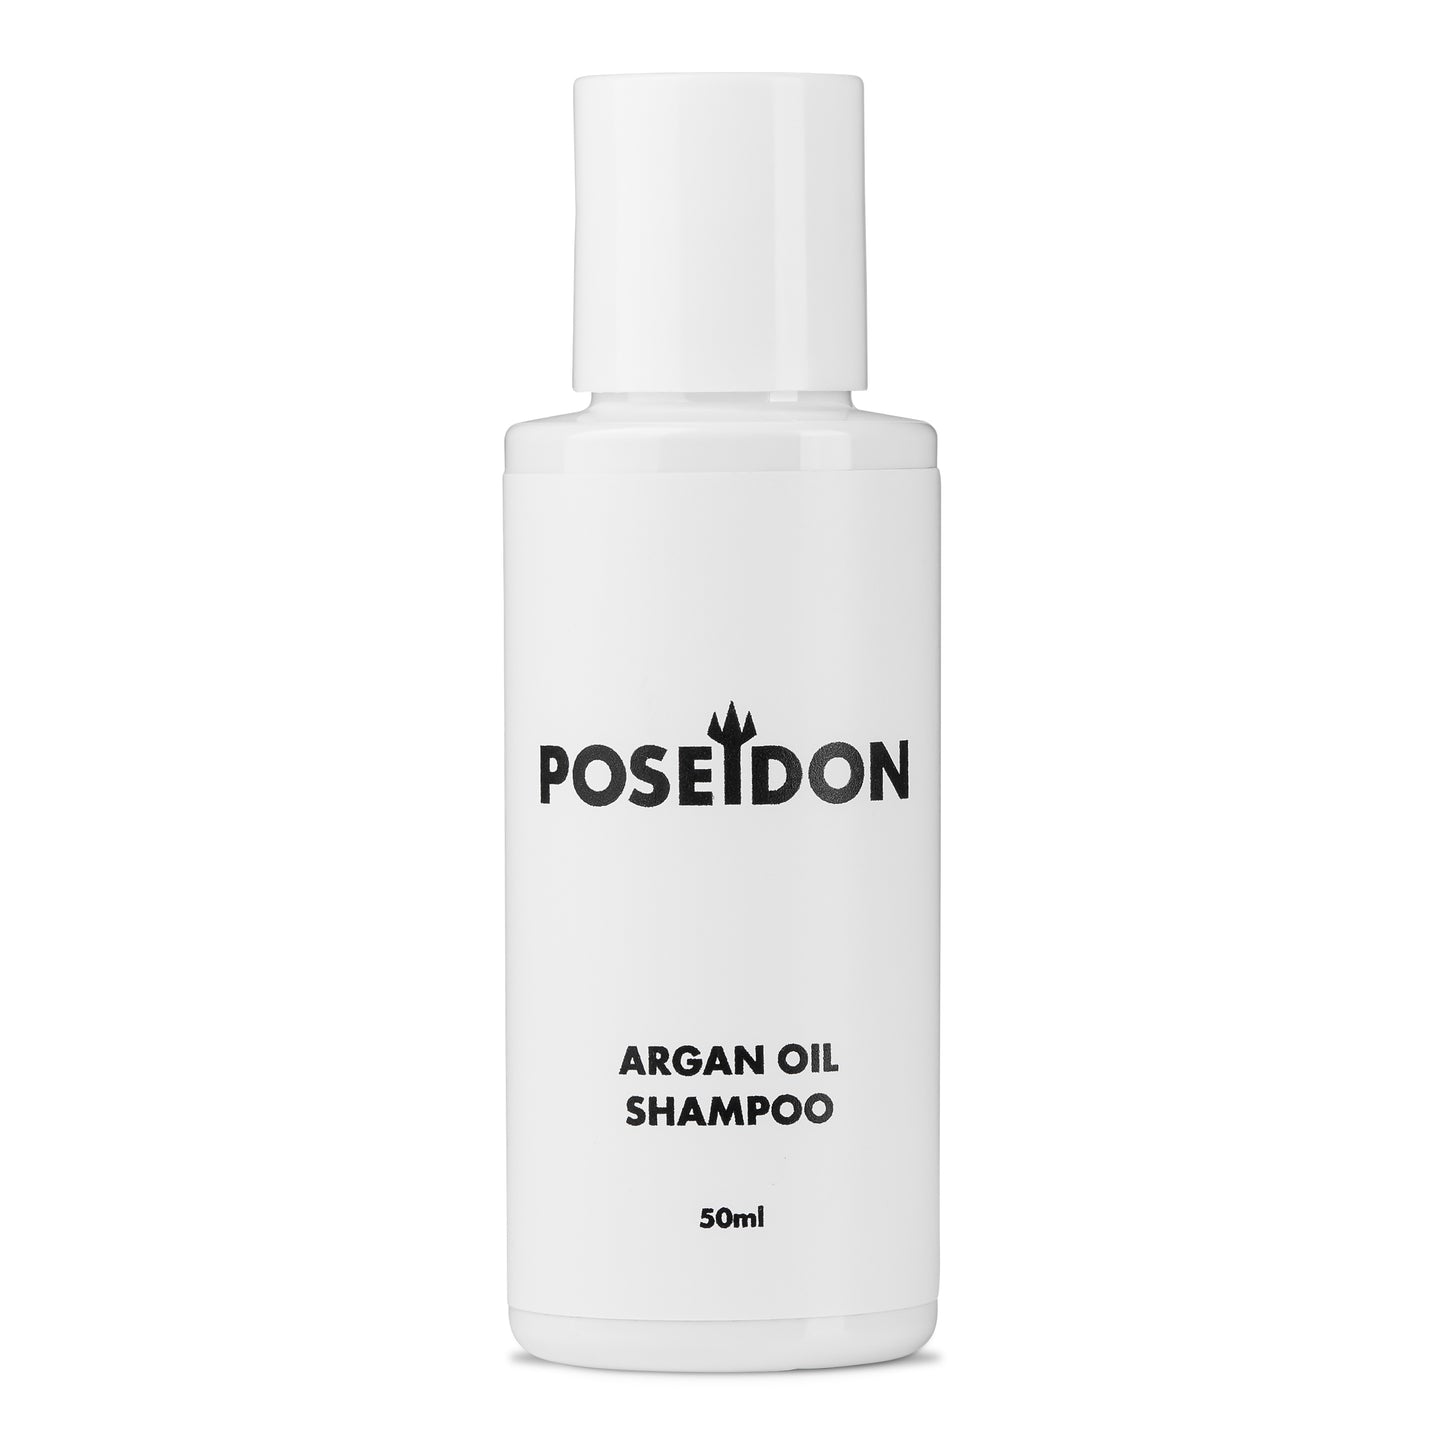 Poseidon Argan Oil Shampoo & Conditioner